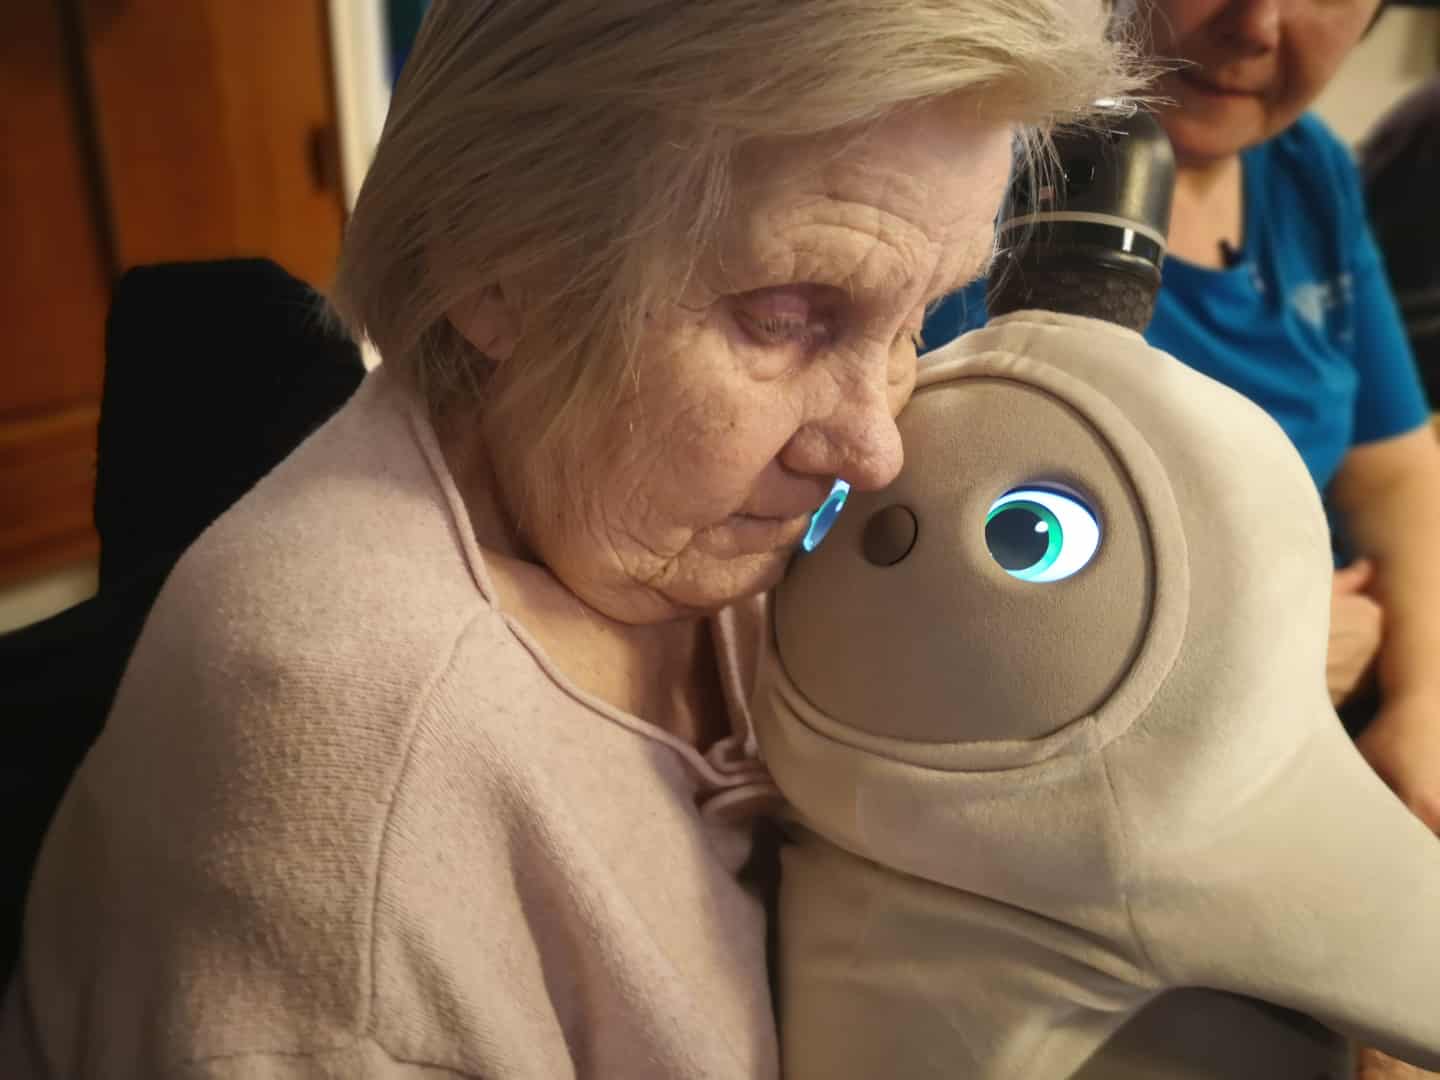 Robotter på plejehjem: om at Lovot kan øge livskvaliteten | viborg-folkeblad.dk